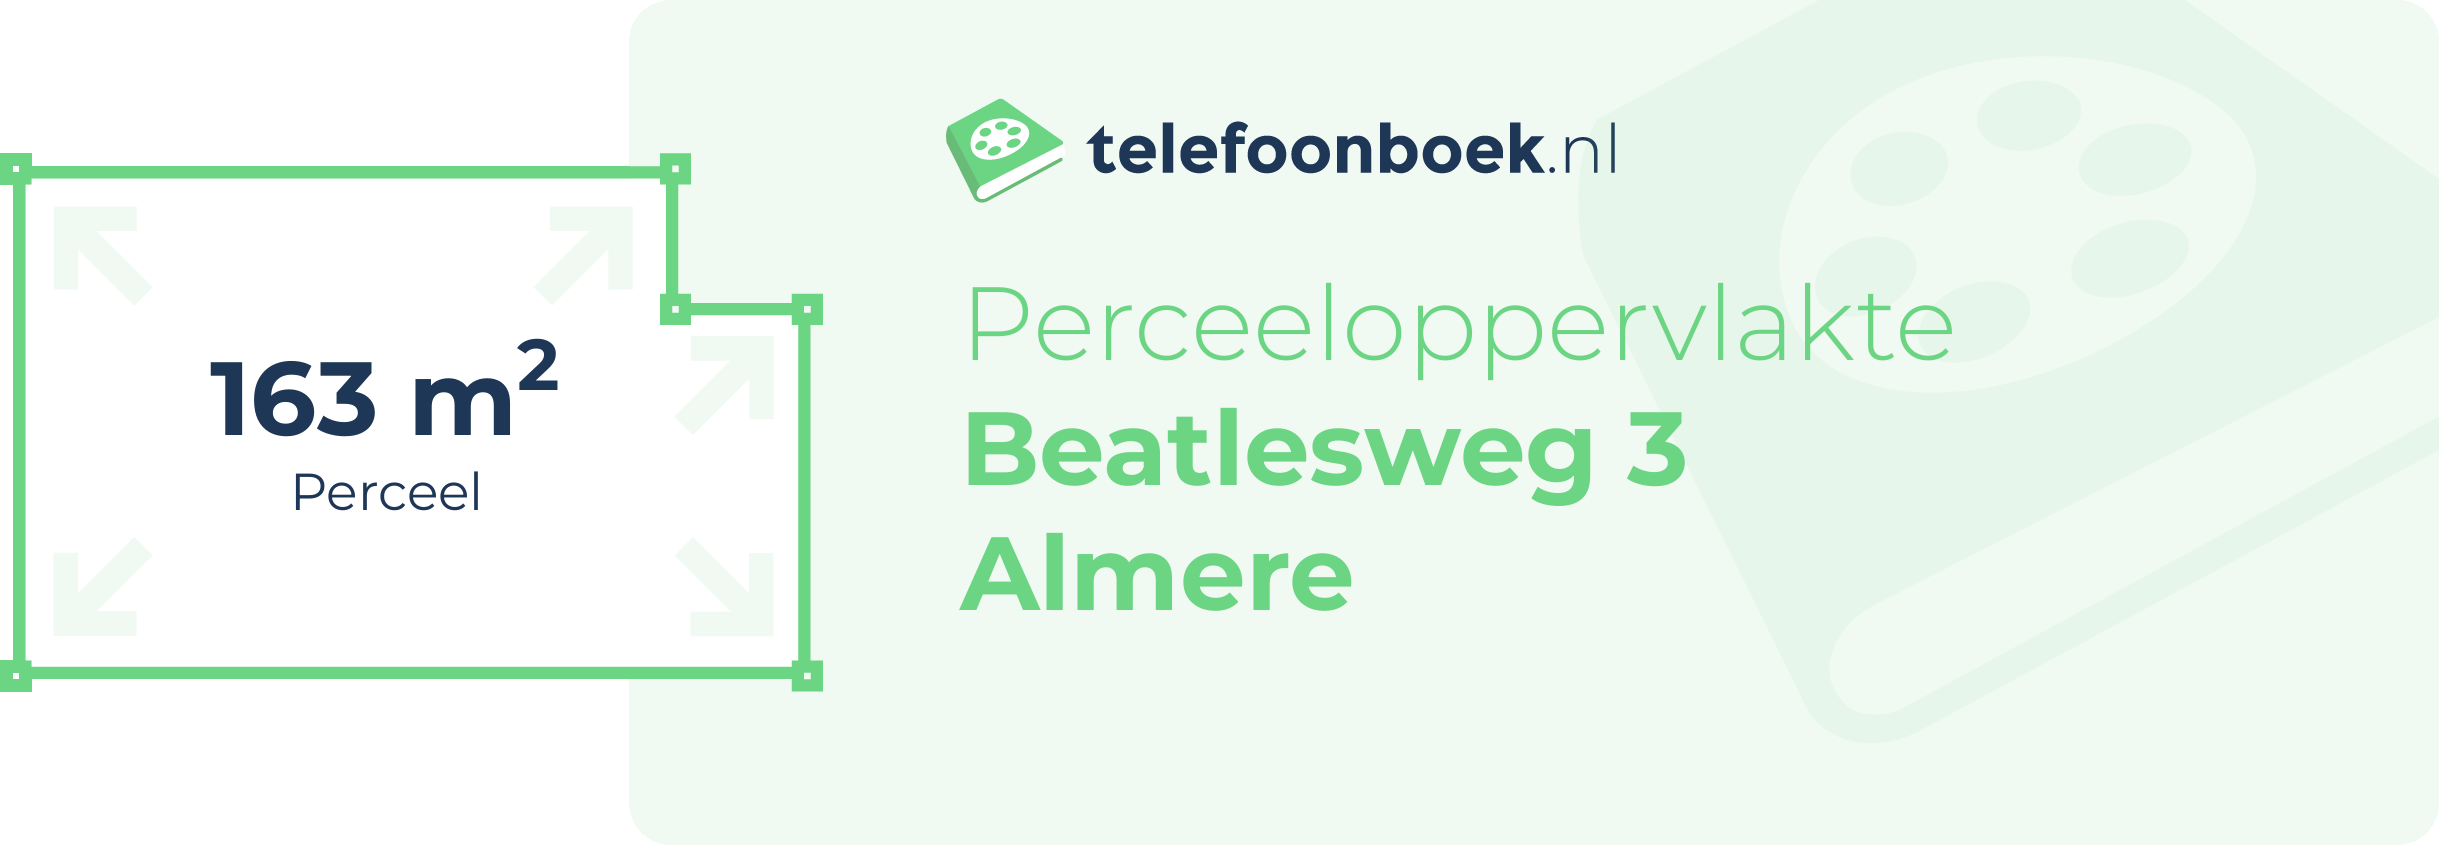 Perceeloppervlakte Beatlesweg 3 Almere